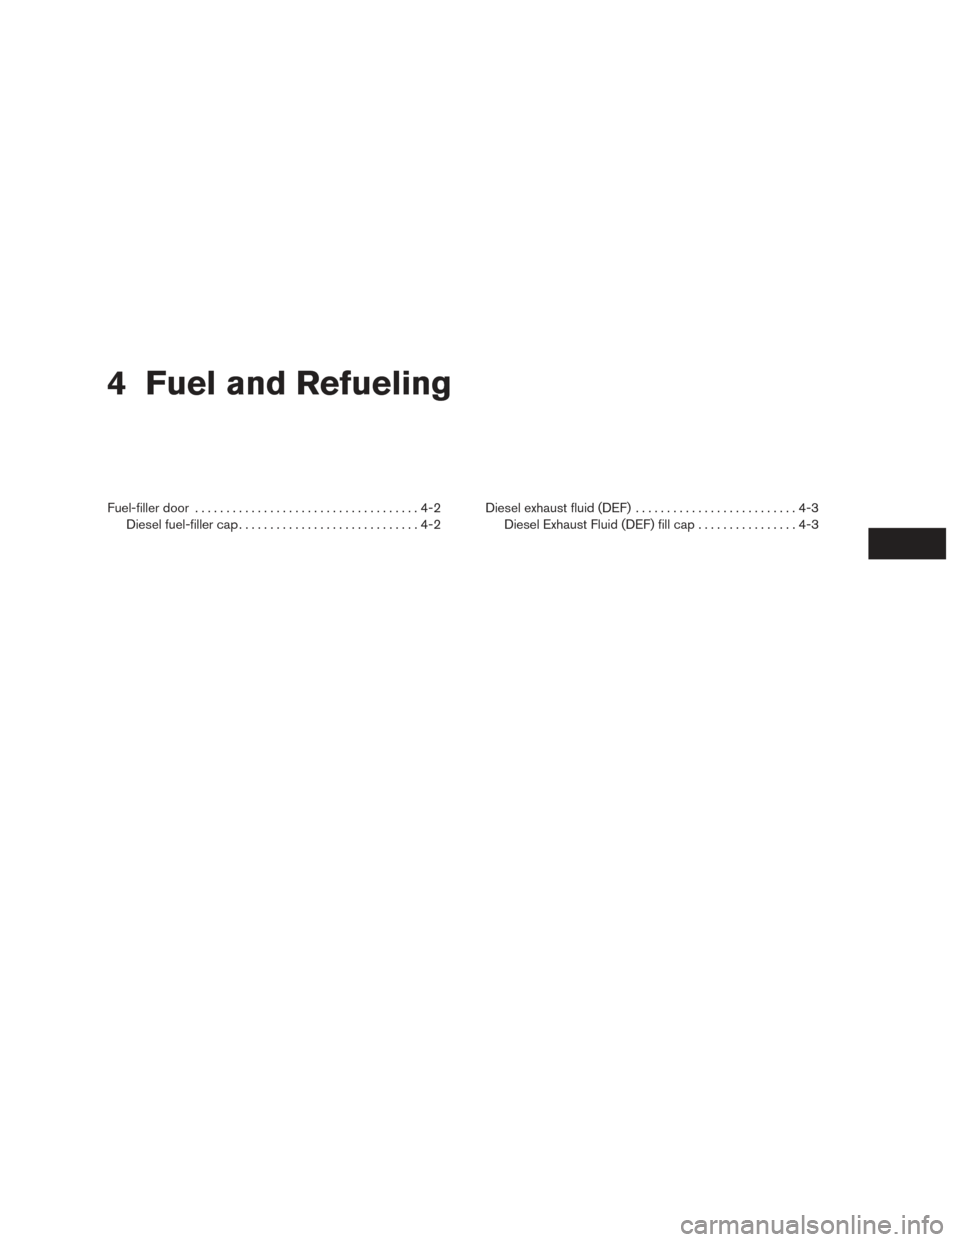 NISSAN TITAN 2016 2.G Owners Manual 4 Fuel and Refueling
Fuel-filler door....................................4-2
Diesel fuel-filler cap .............................4-2 Diesel exhaust fluid (DEF)
..........................4-3
Diesel Exh